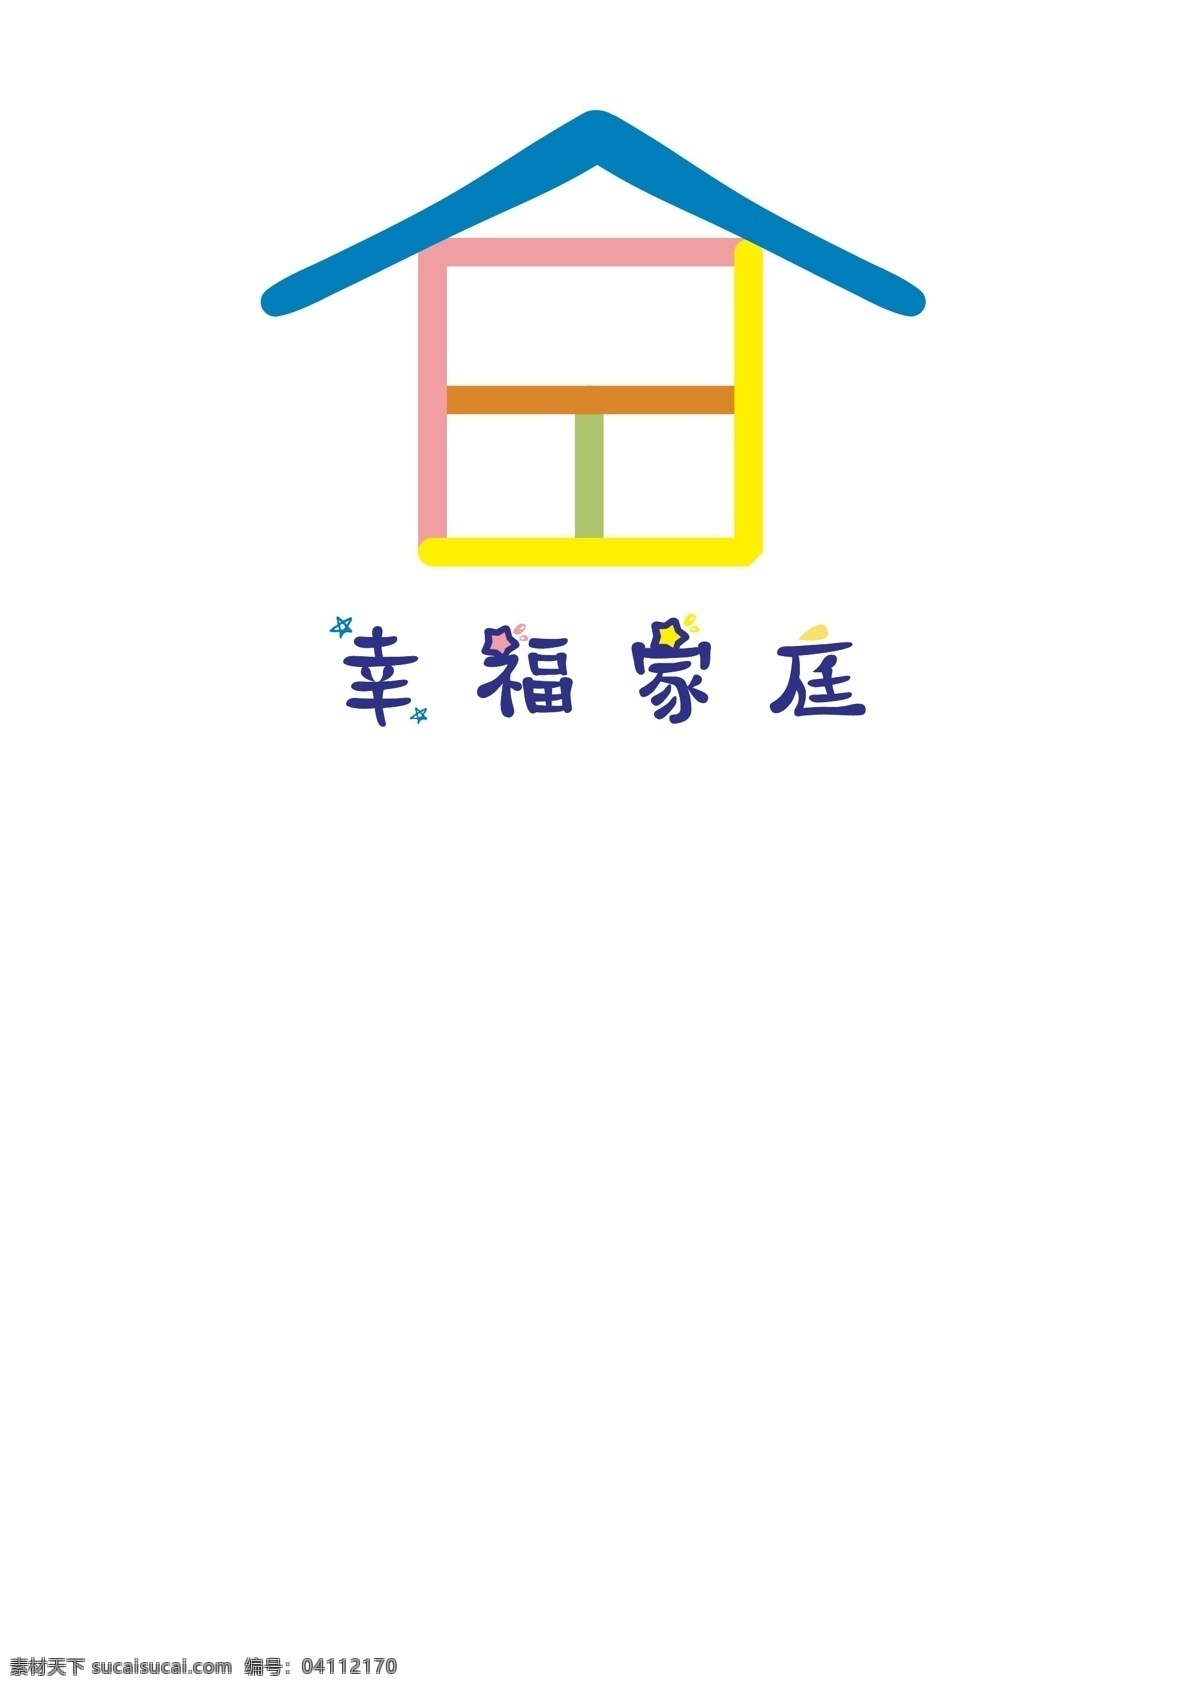 幸福 家庭 logo xfjt 社区 logo设计